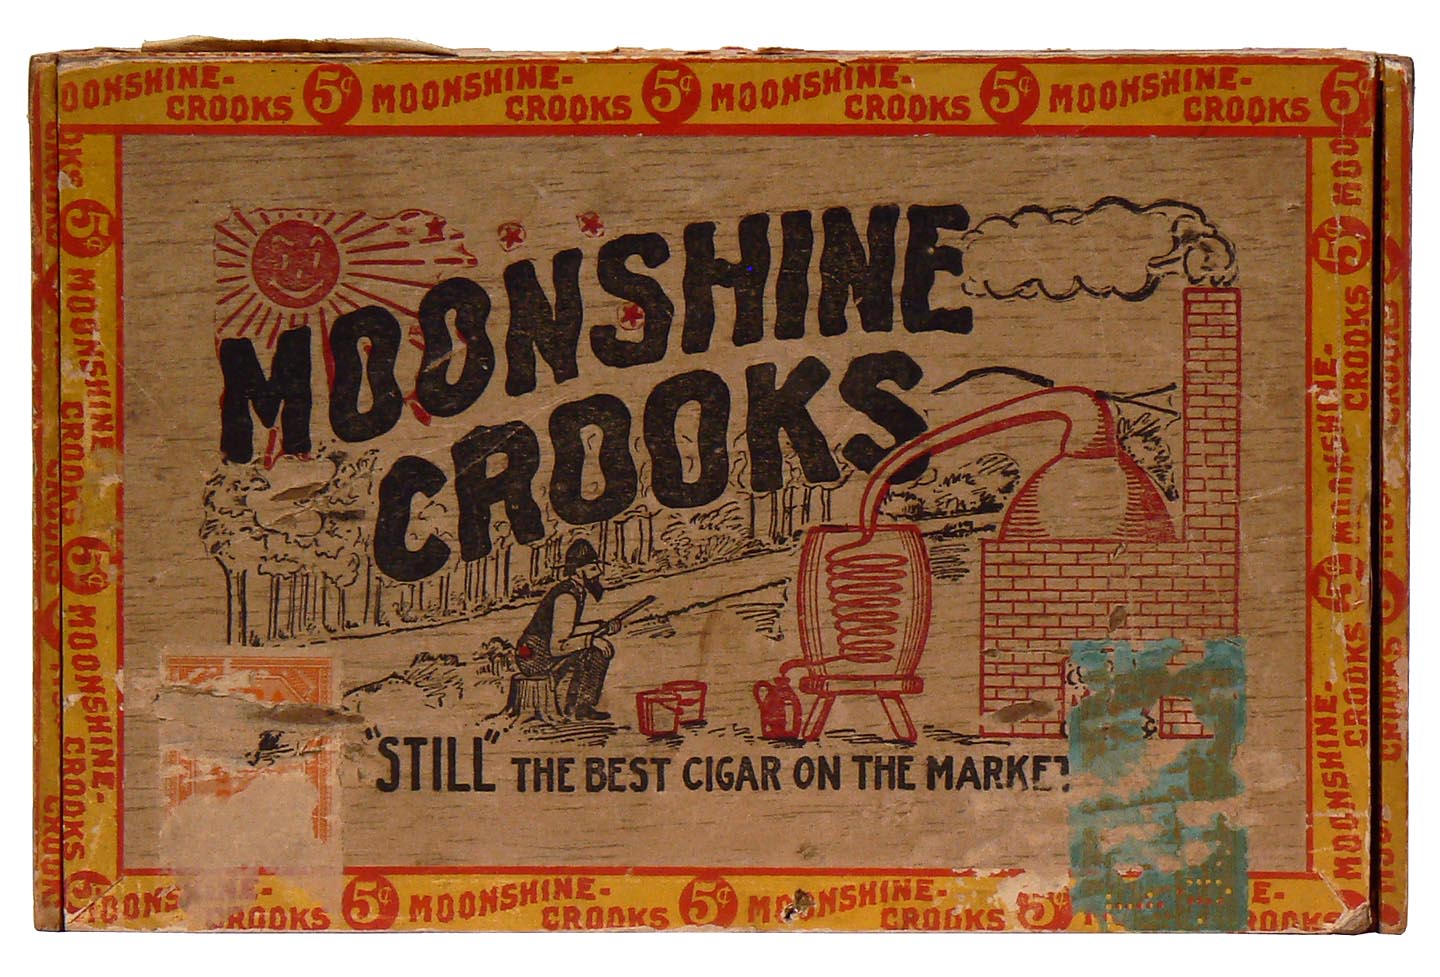 Moonshine Crooks Wood Cigar Box